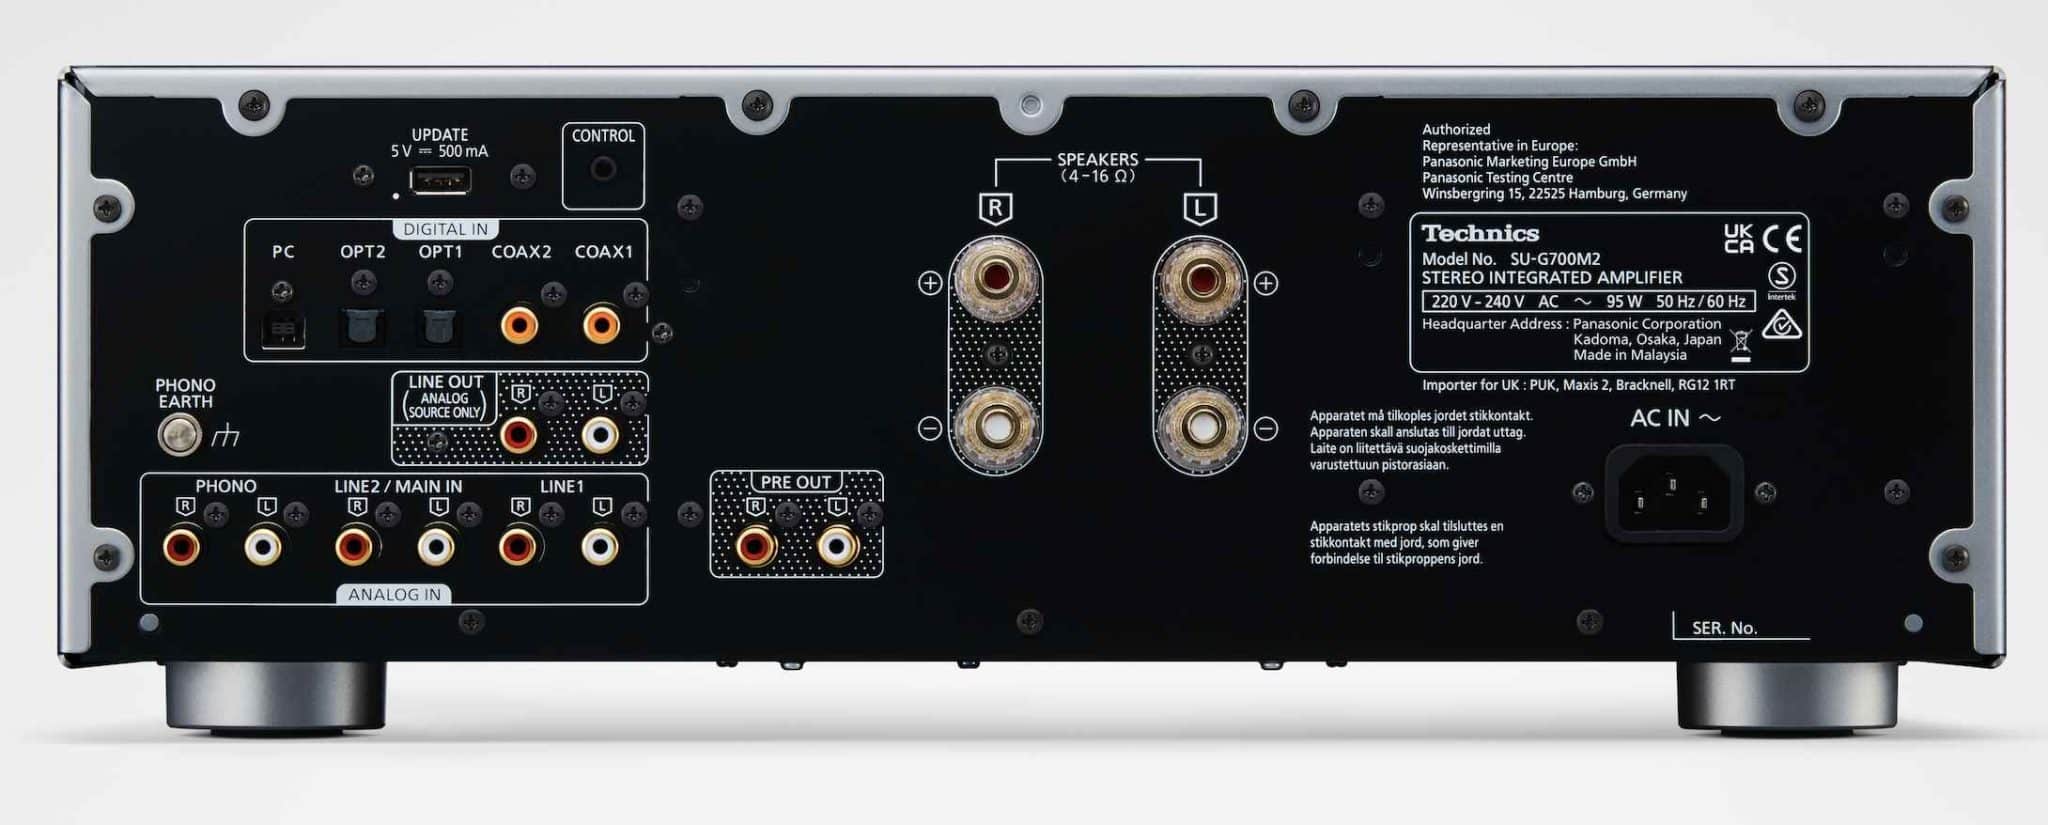 SU-G700M2 Integrated Amplifier From Technics